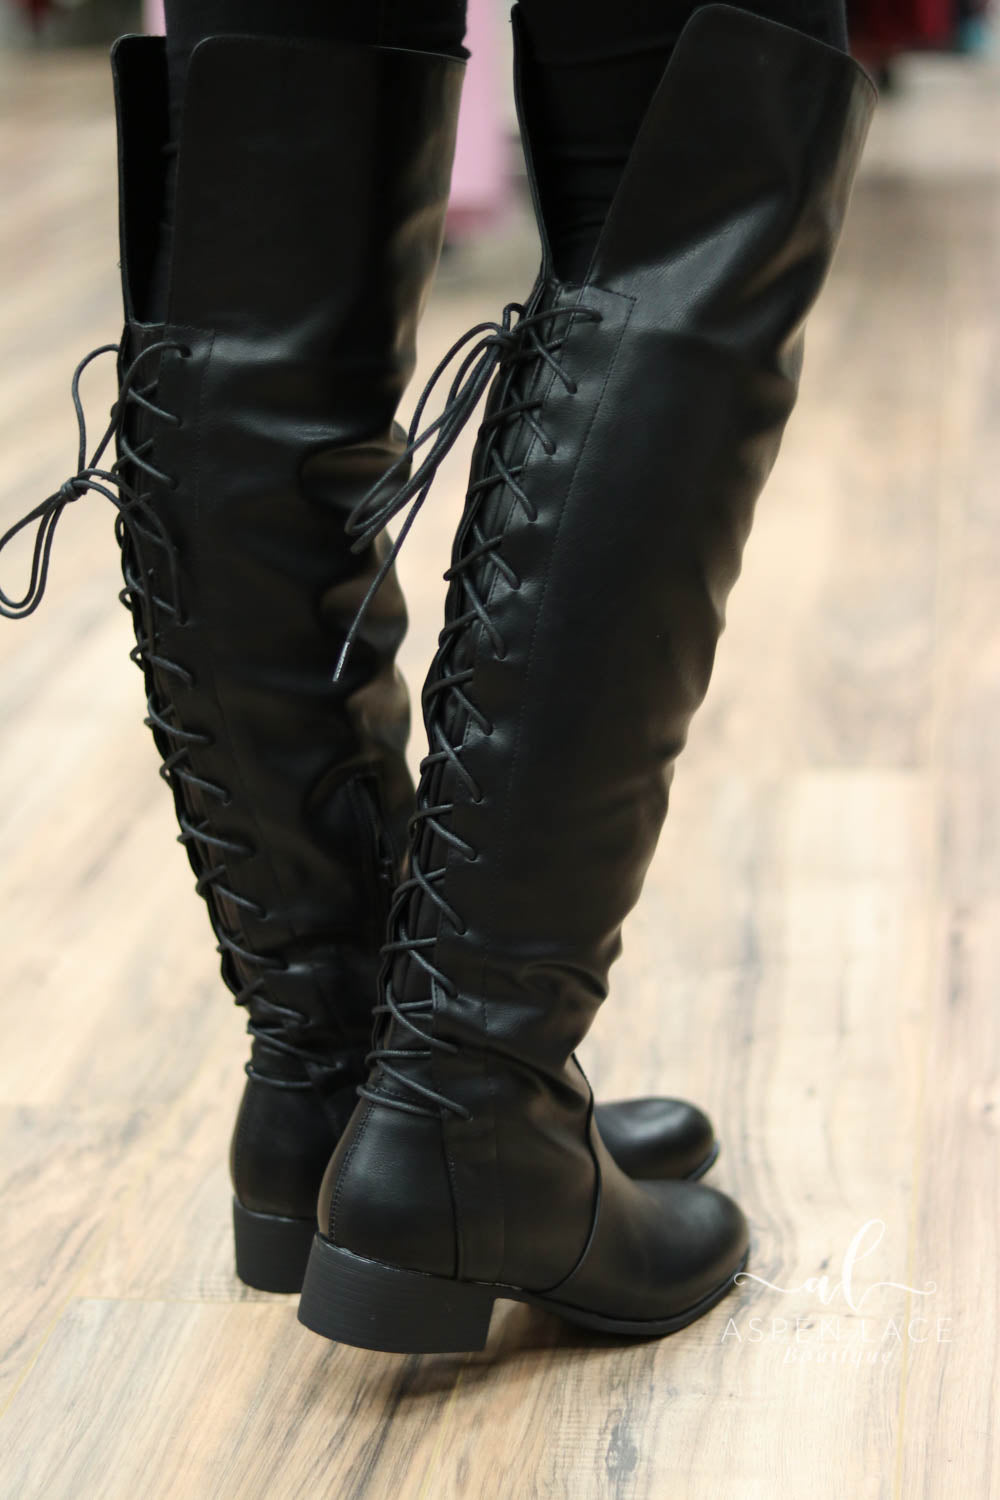 rlx boots